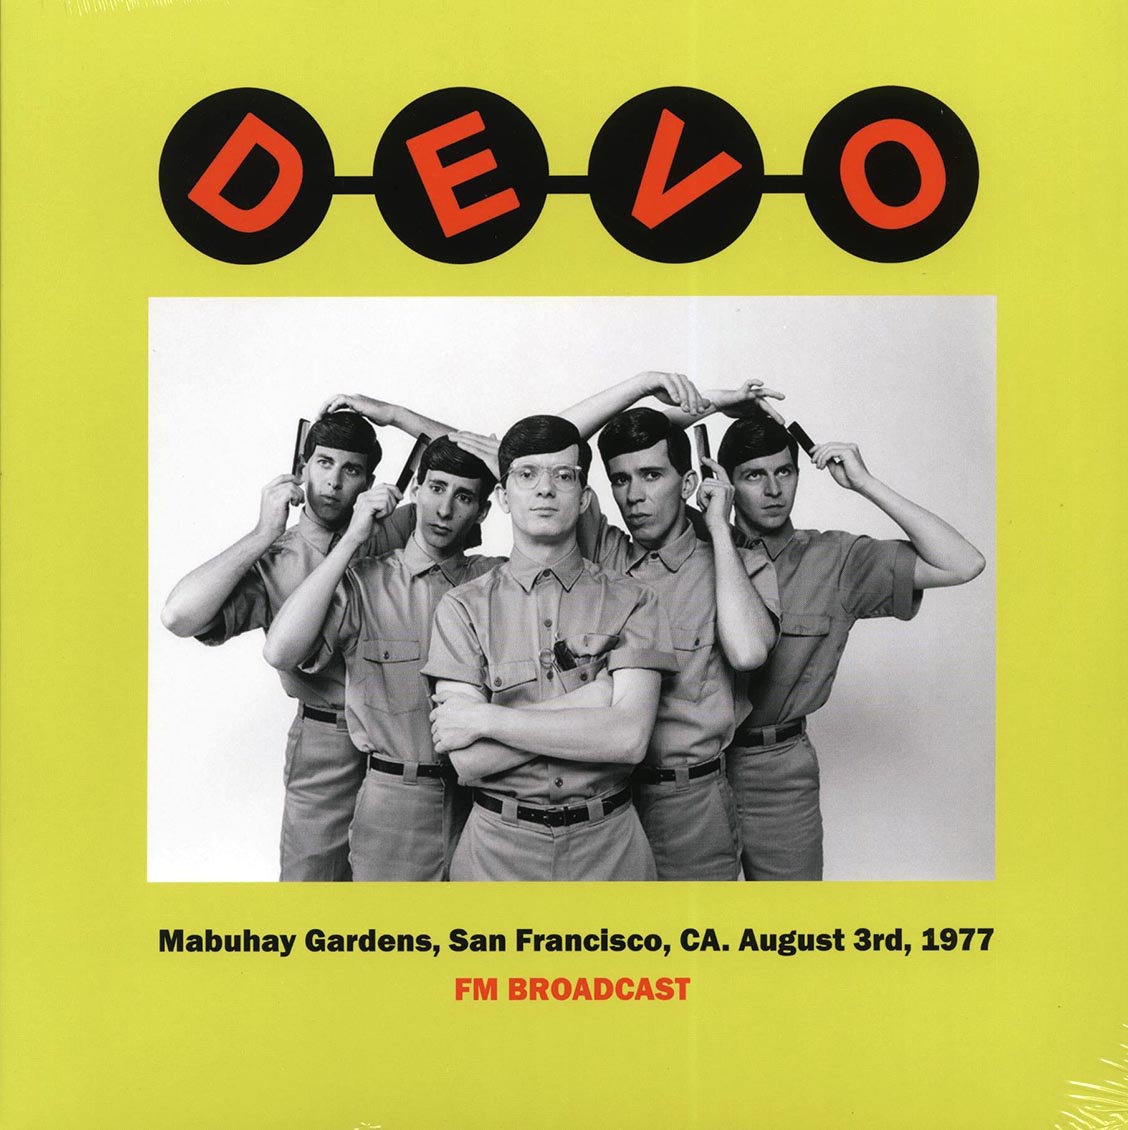 Devo - Mabuhay Gardens, San Francisco, CA. August 3rd, 1977 FM Broadcast (ltd. 500 copies made) - Vinyl LP